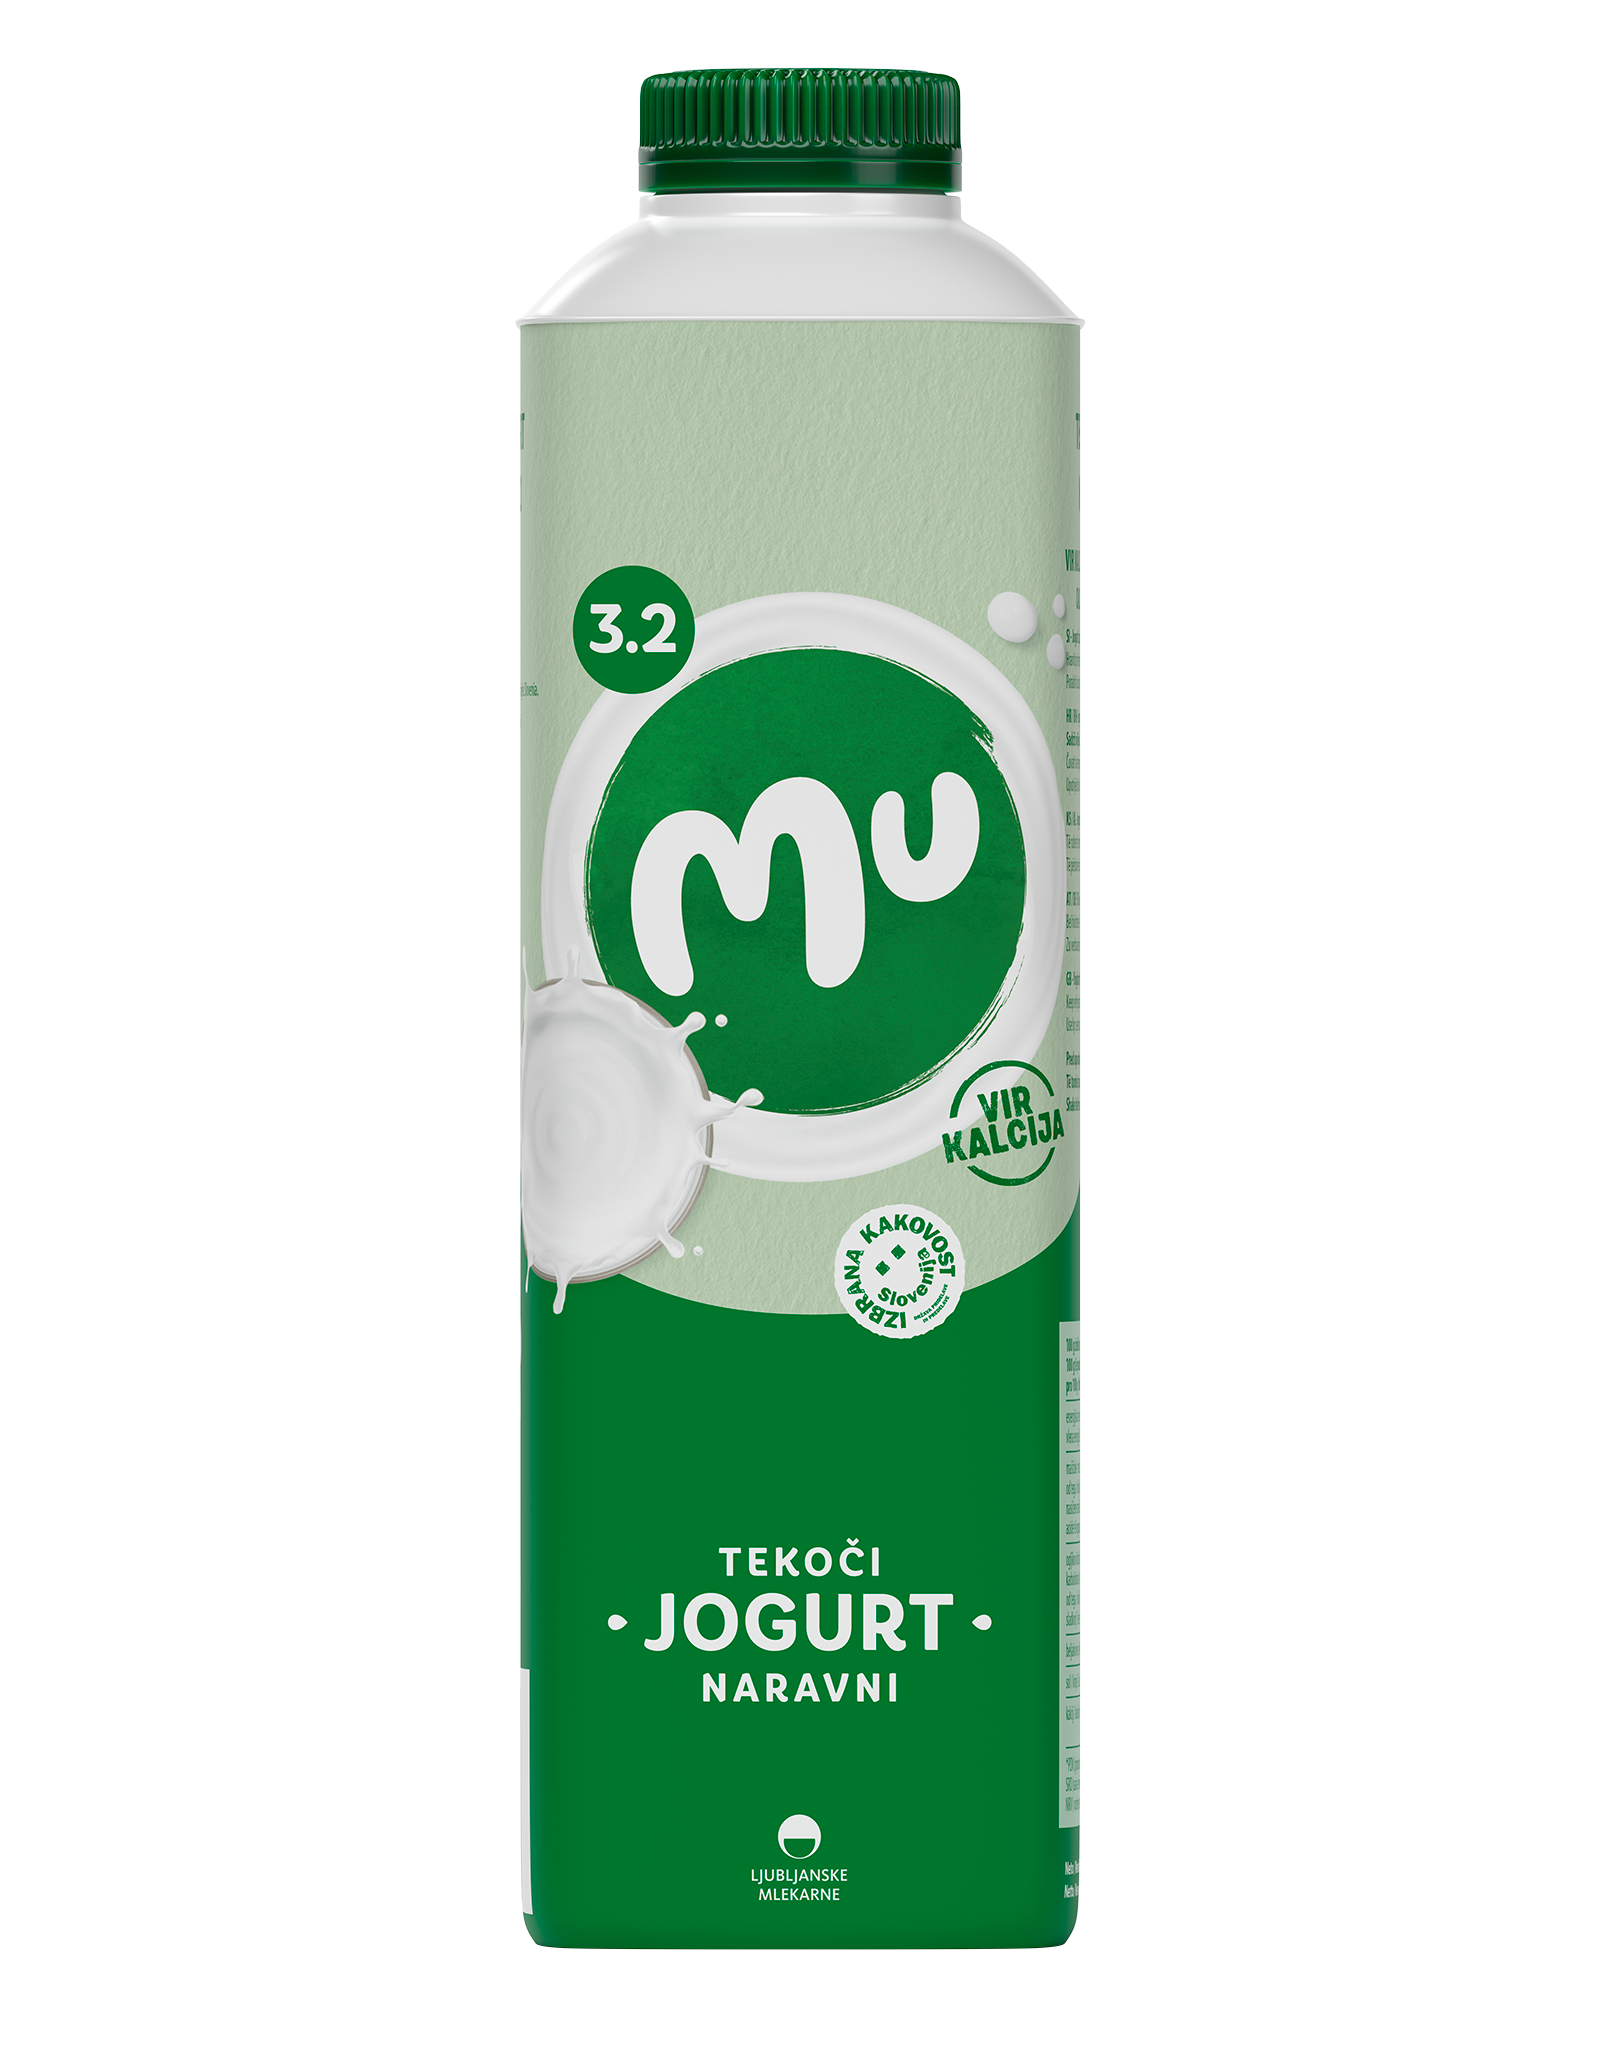 Mu natural drinking yoghurt with 3,2 % milk fat; TT